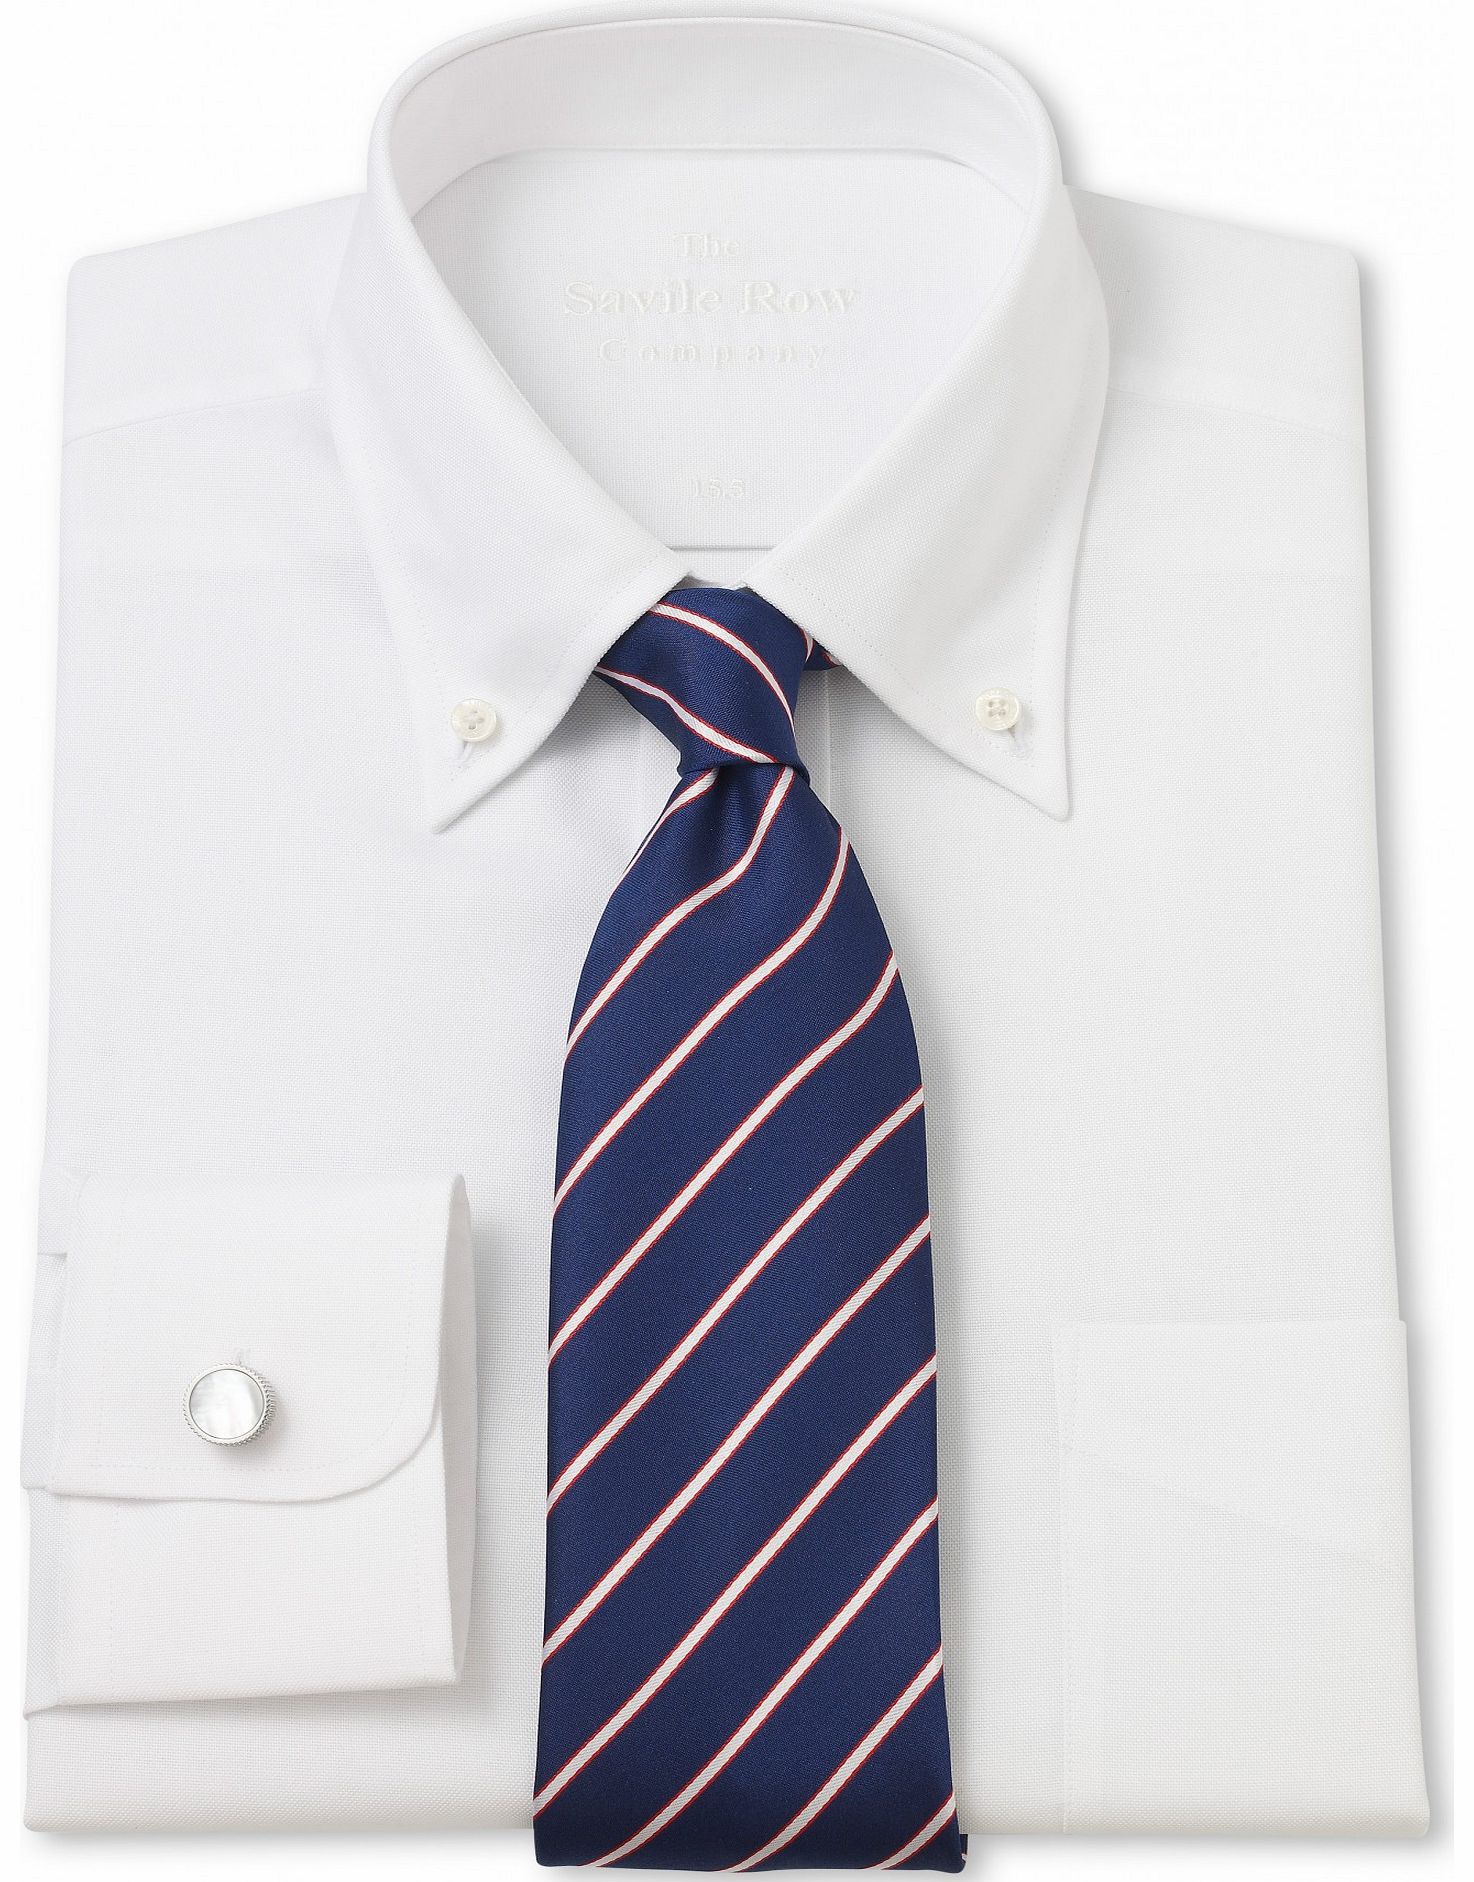 Savile Row Company White Oxford Button Down Classic Shirt 16``